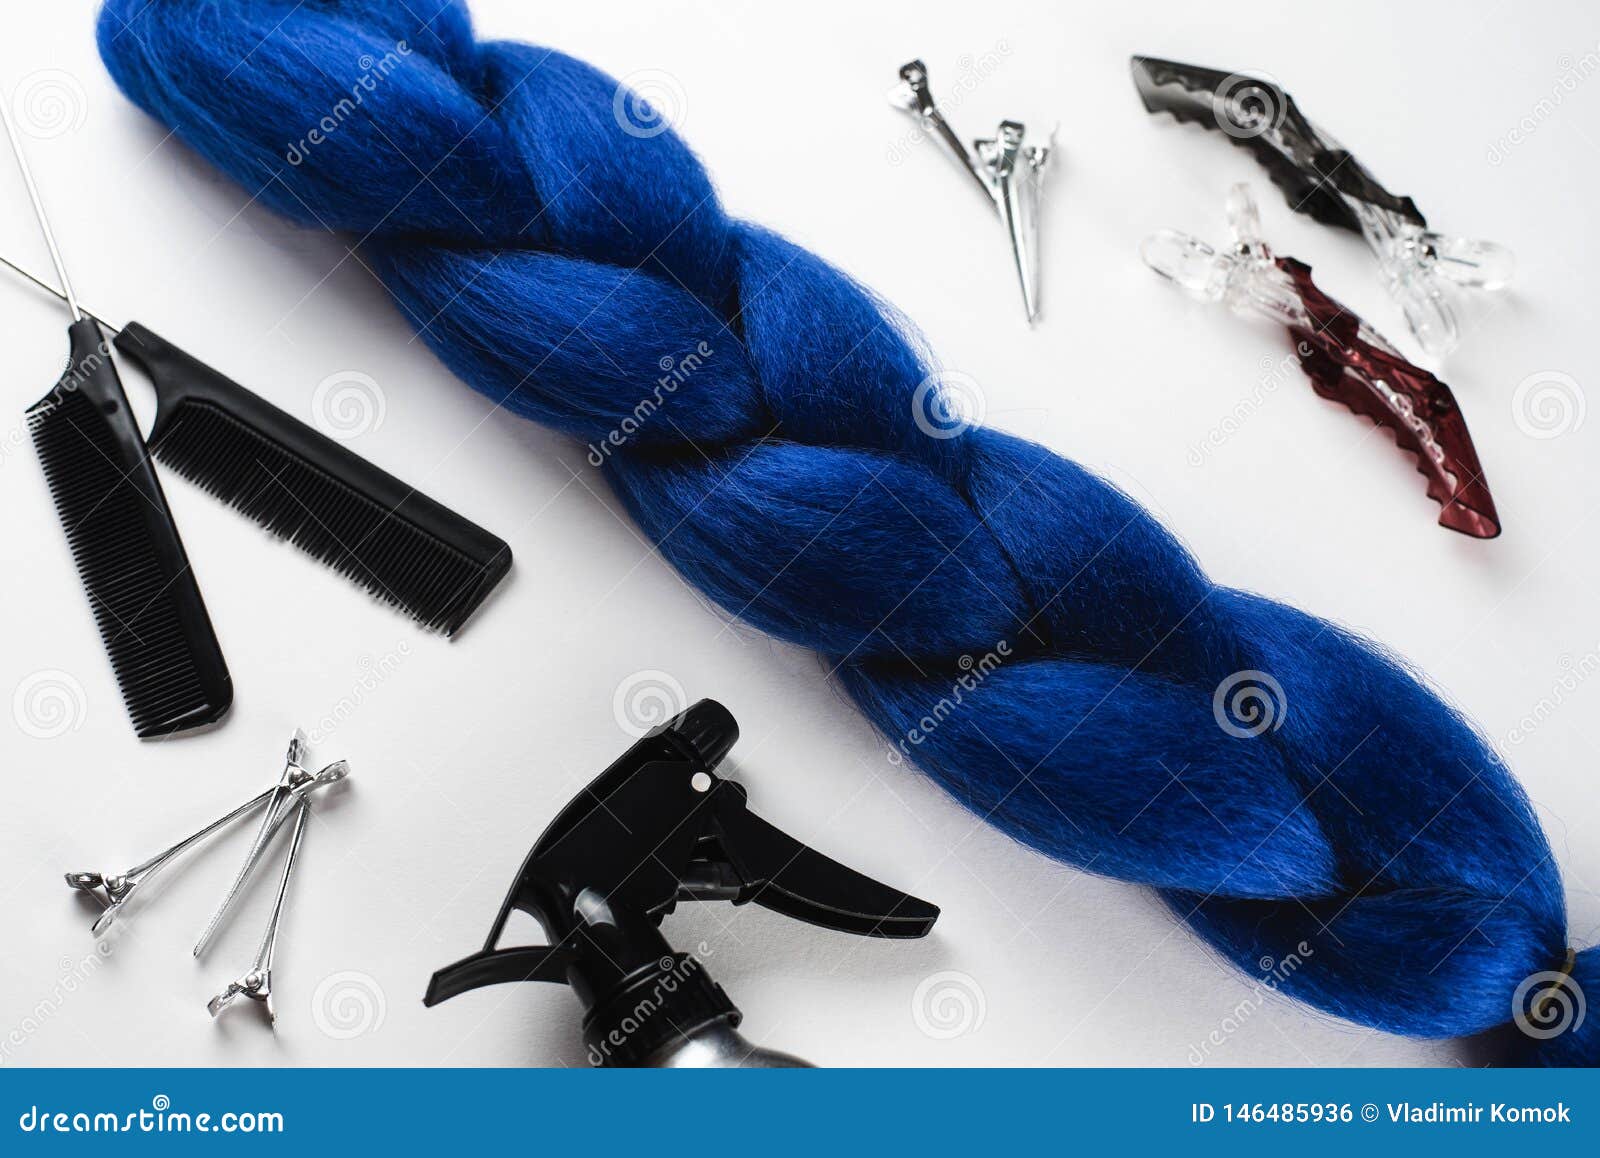 6. Dark Blue Kanekalon Synthetic Hair - wide 2